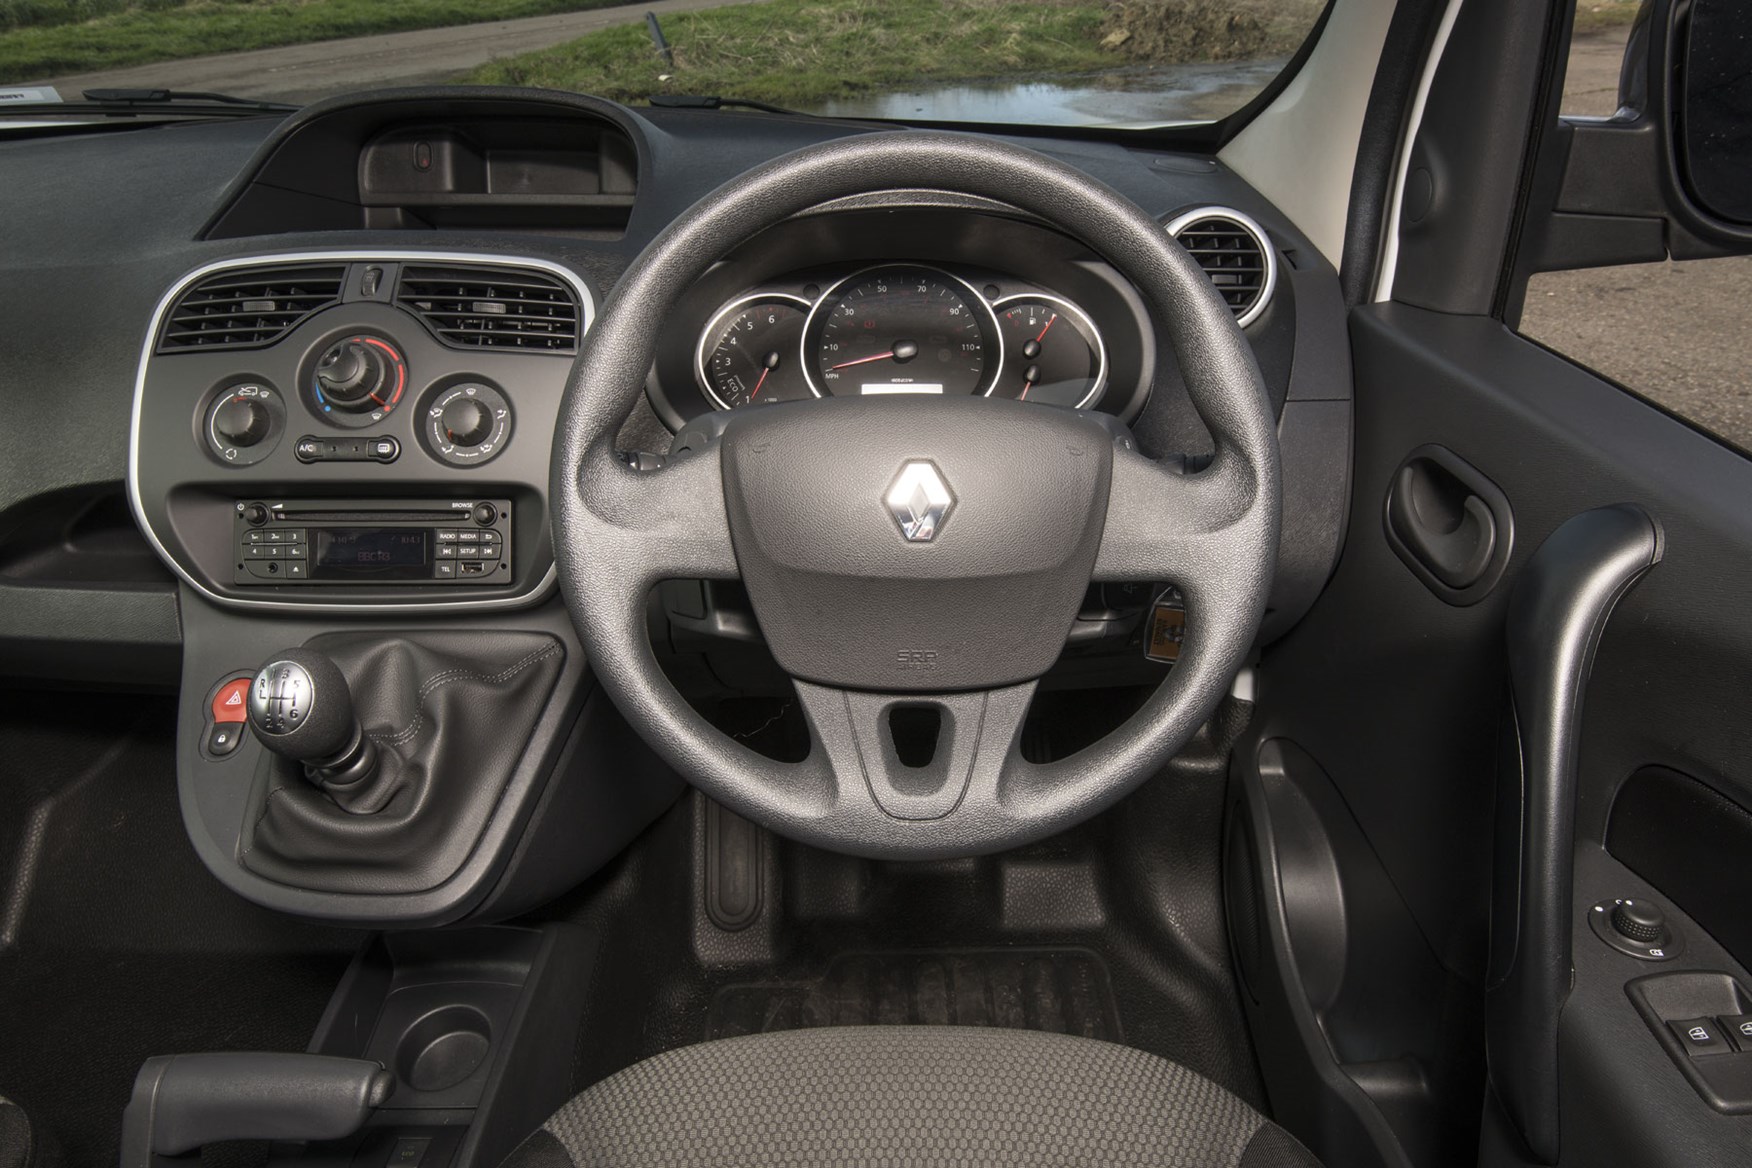 Renault Kangoo van review - steering wheel, instrument cluster, gearbox